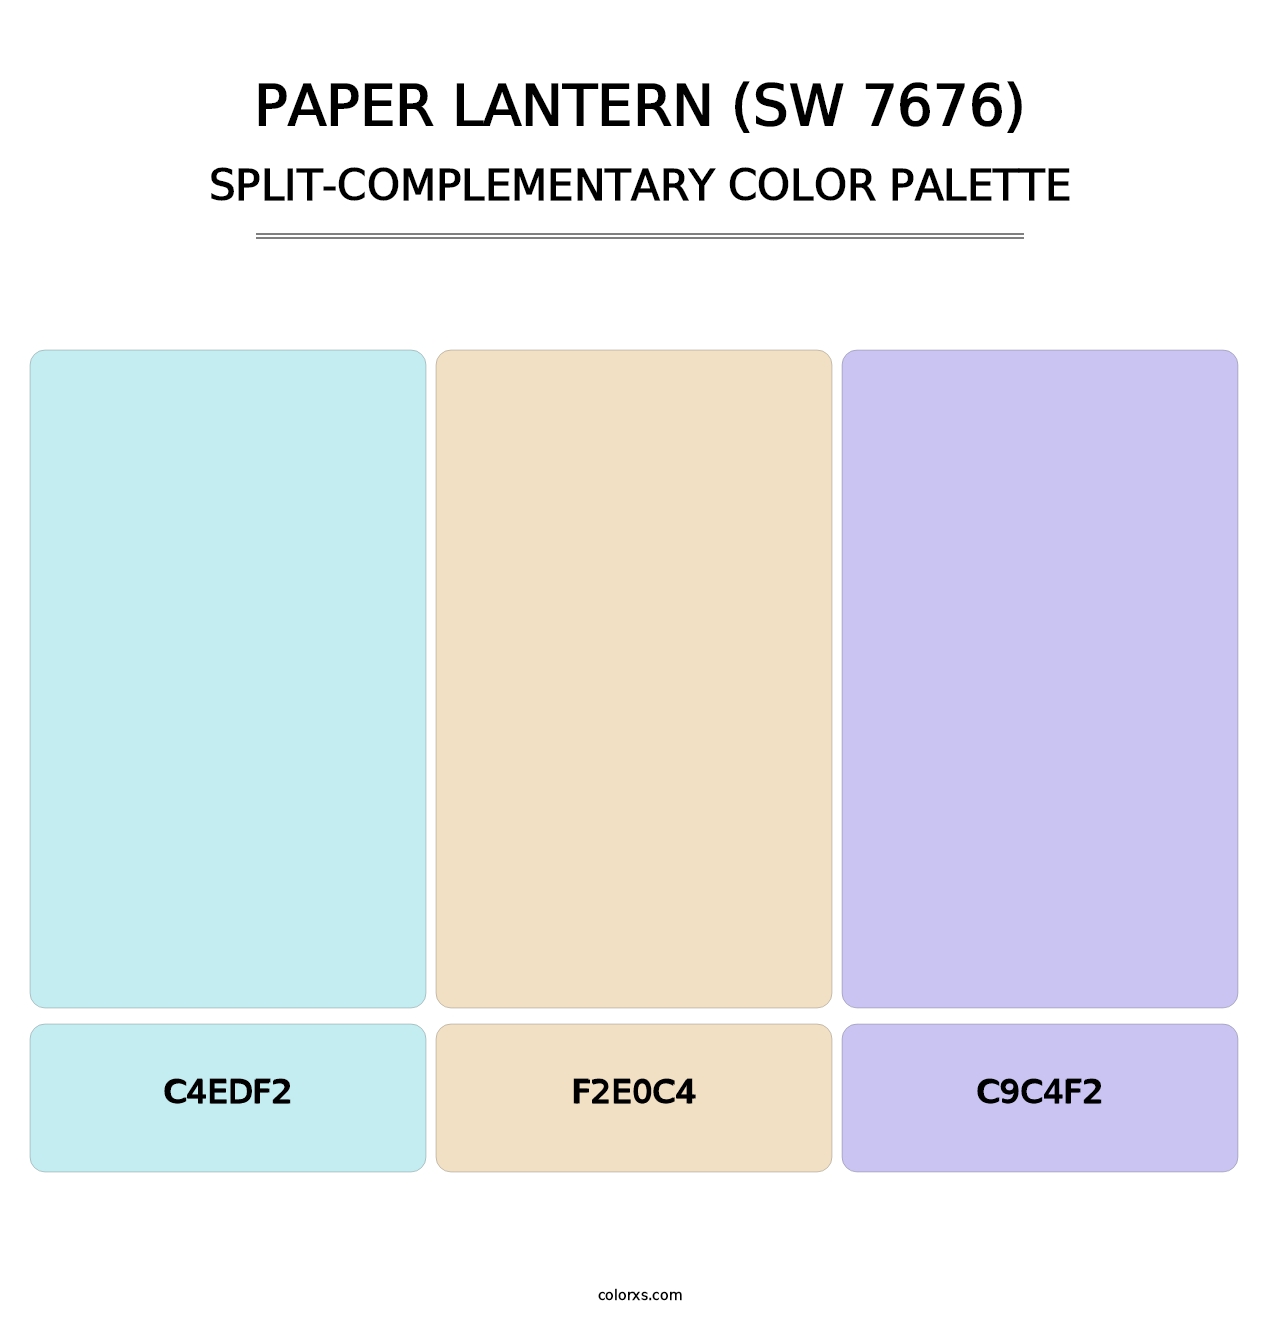 Paper Lantern (SW 7676) - Split-Complementary Color Palette